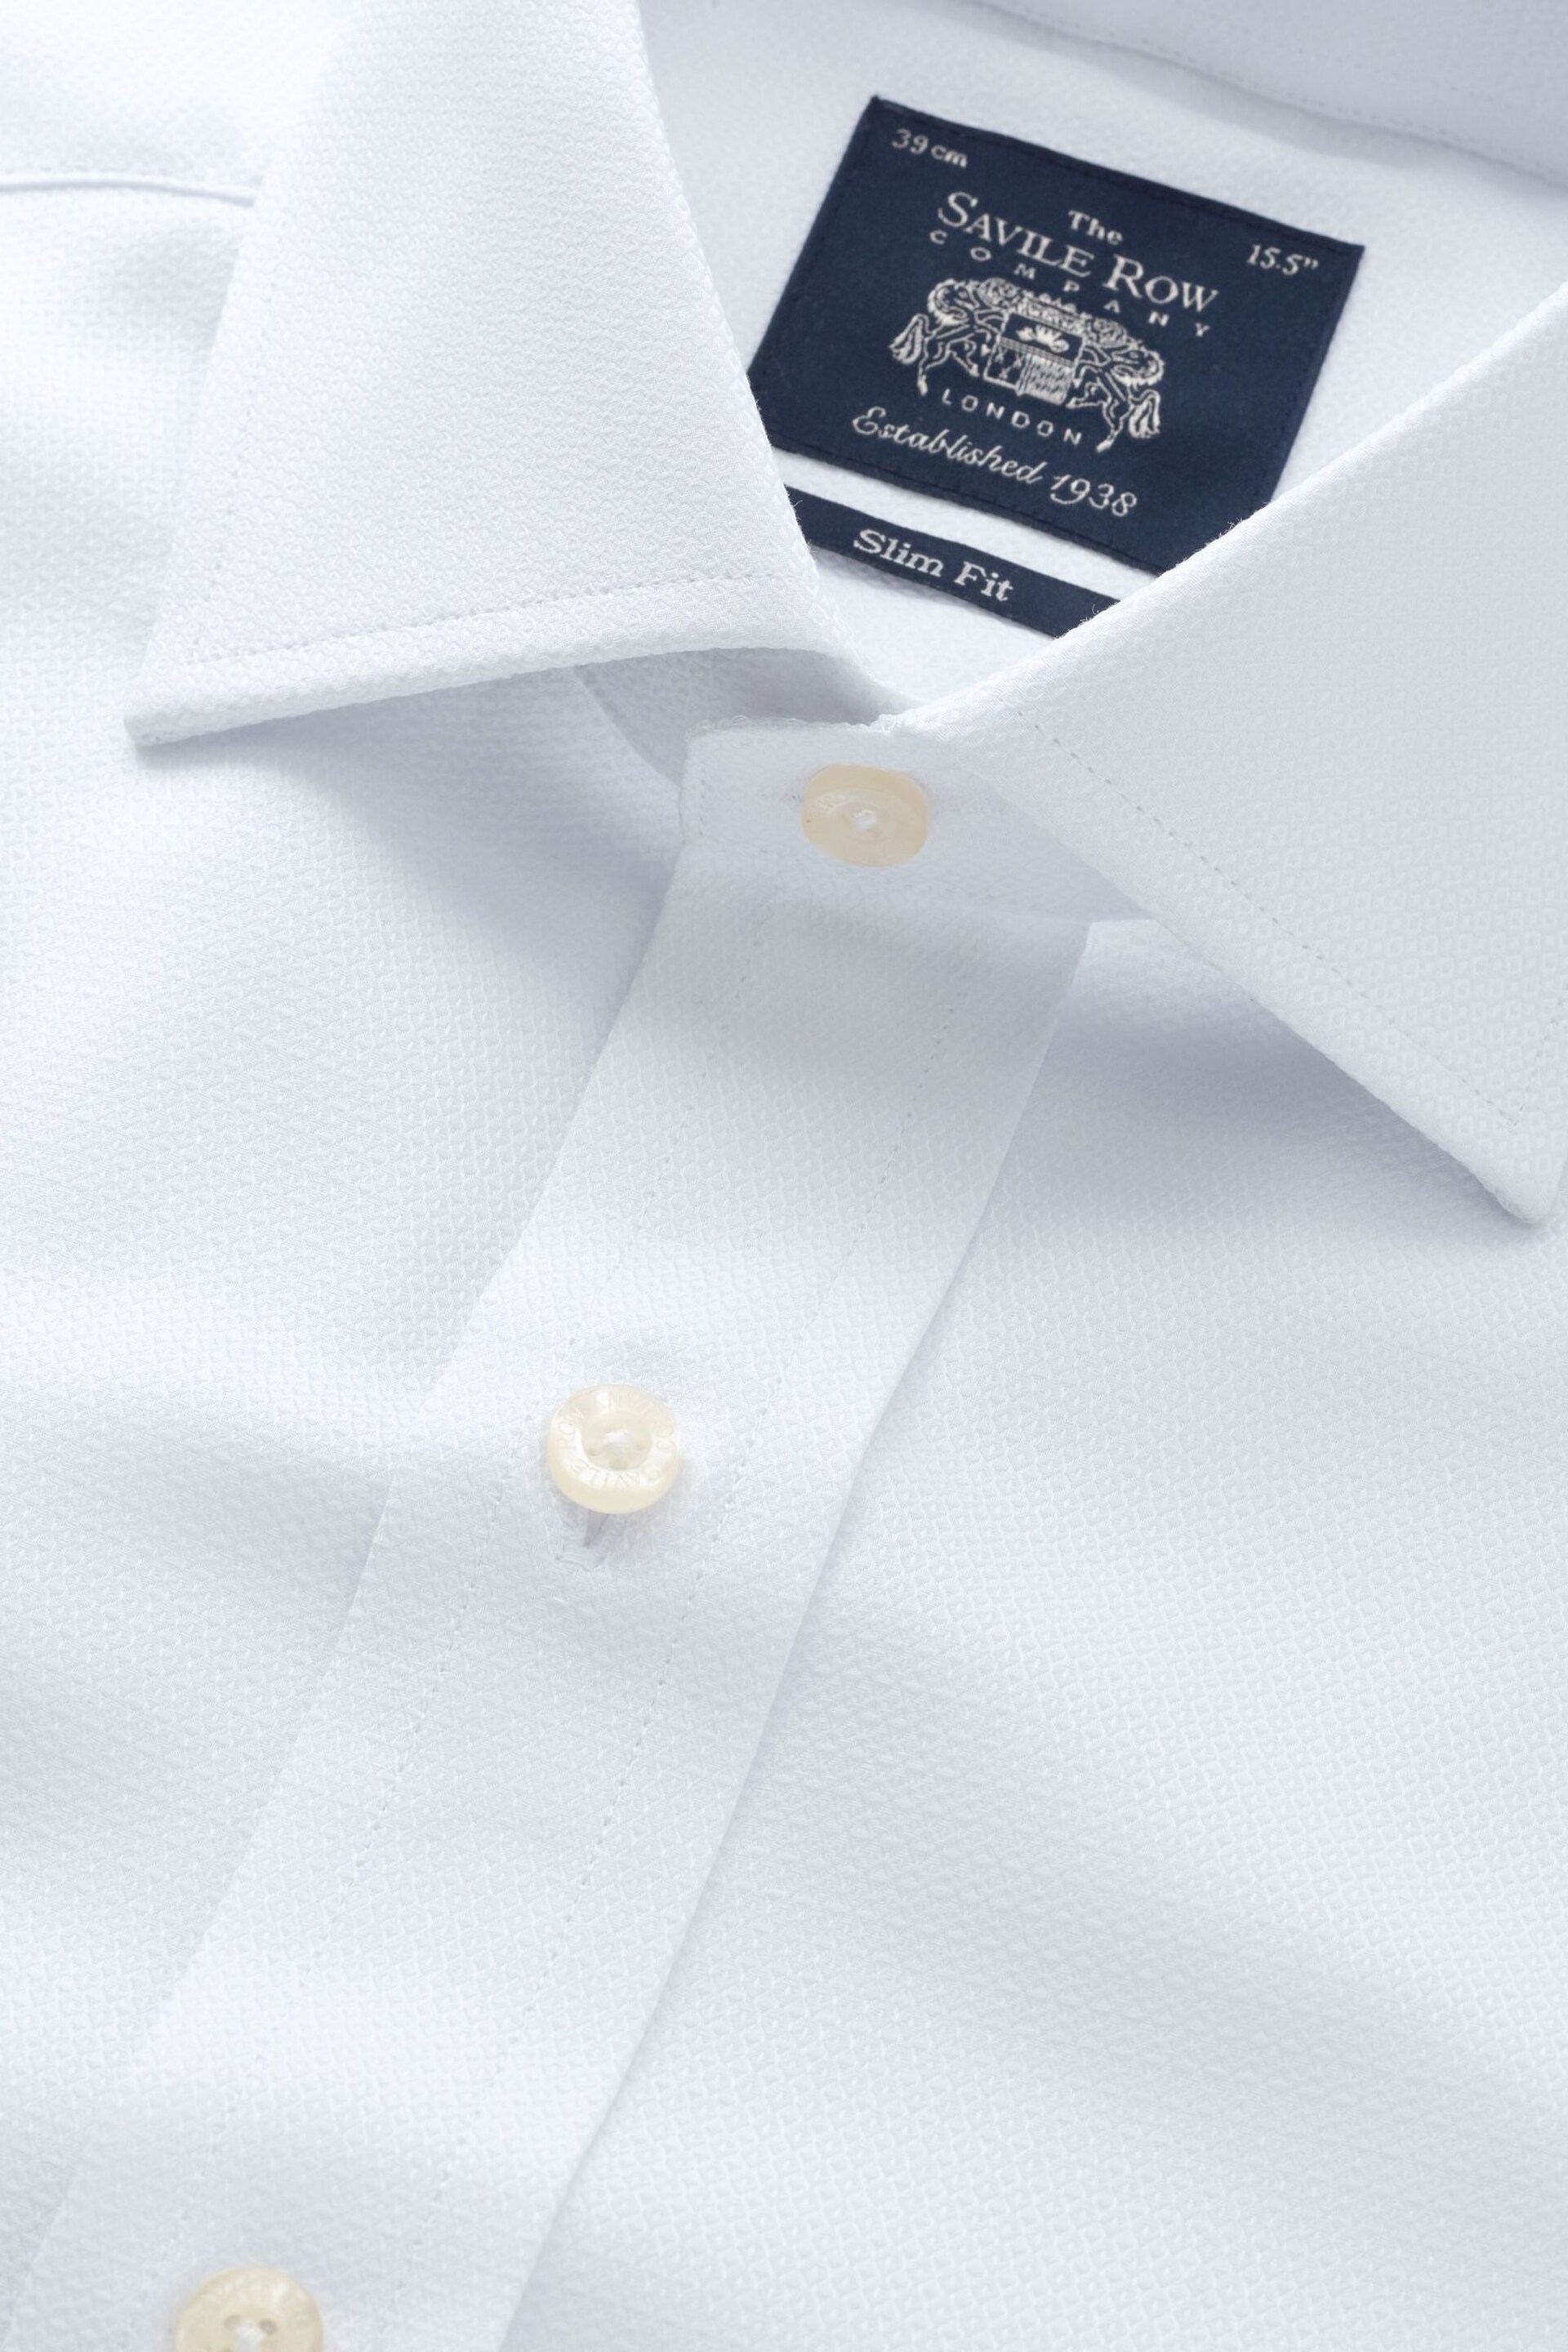 Savile Row Company Textured Dobby Slim Single Cuff White Shirt - Image 4 of 4